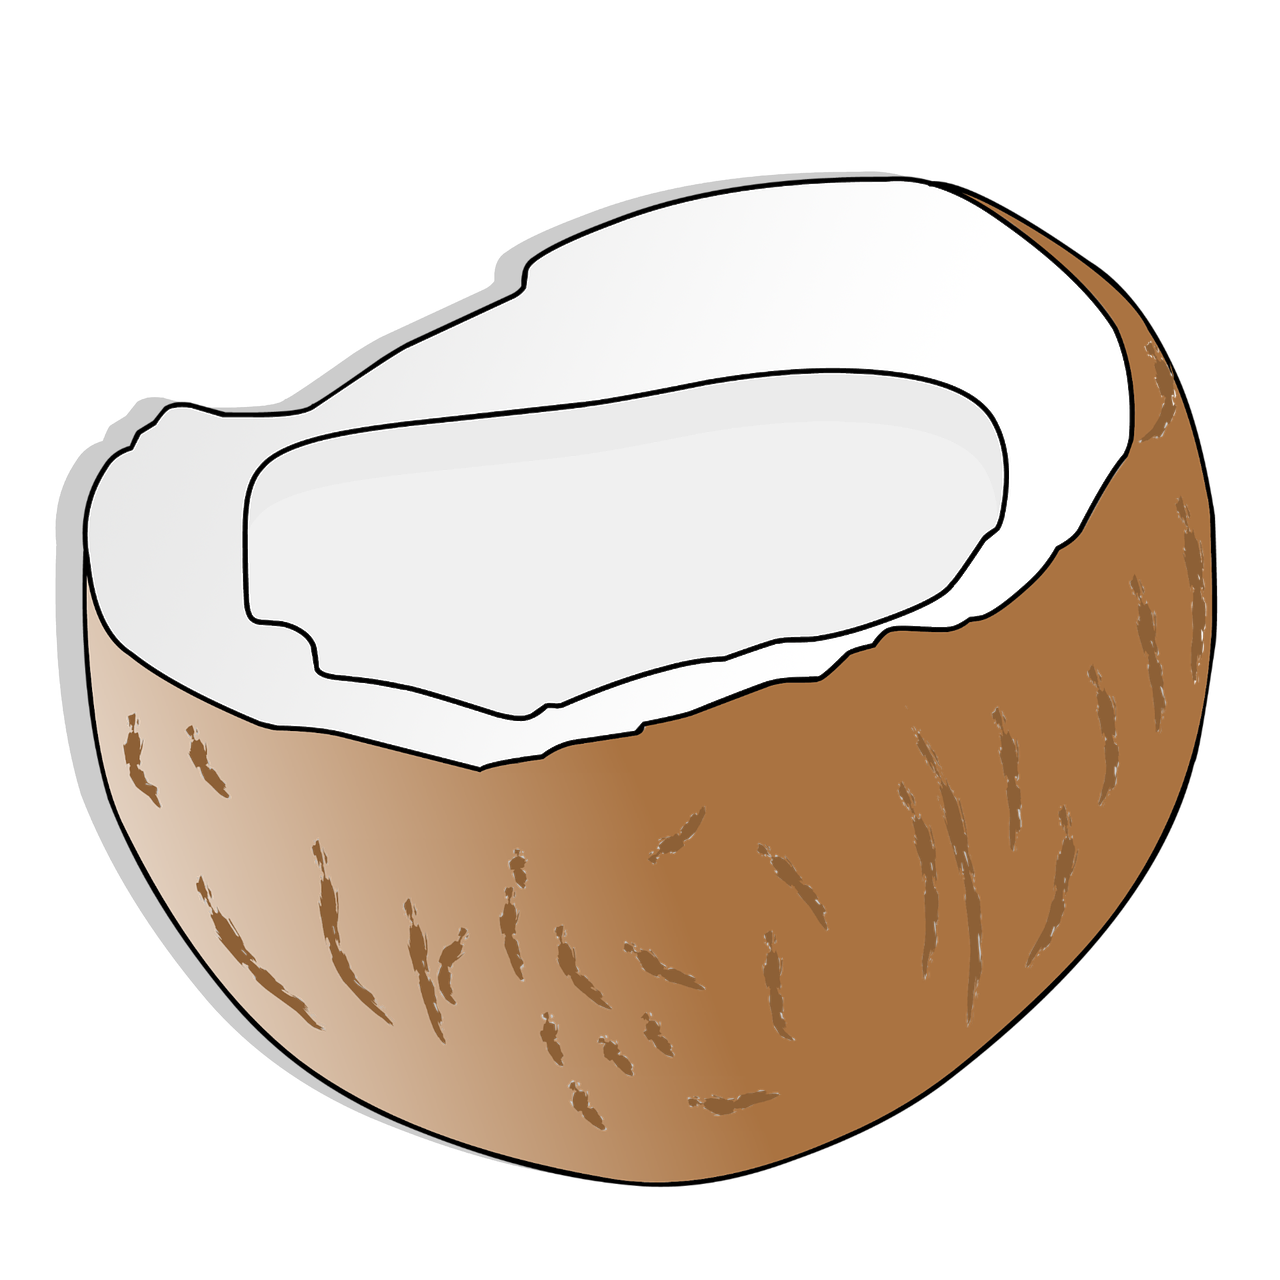 a half eaten coconut on a black background, an illustration of, pixabay, sōsaku hanga, potato skin, sticker illustration, full color illustration, illustration black outlining